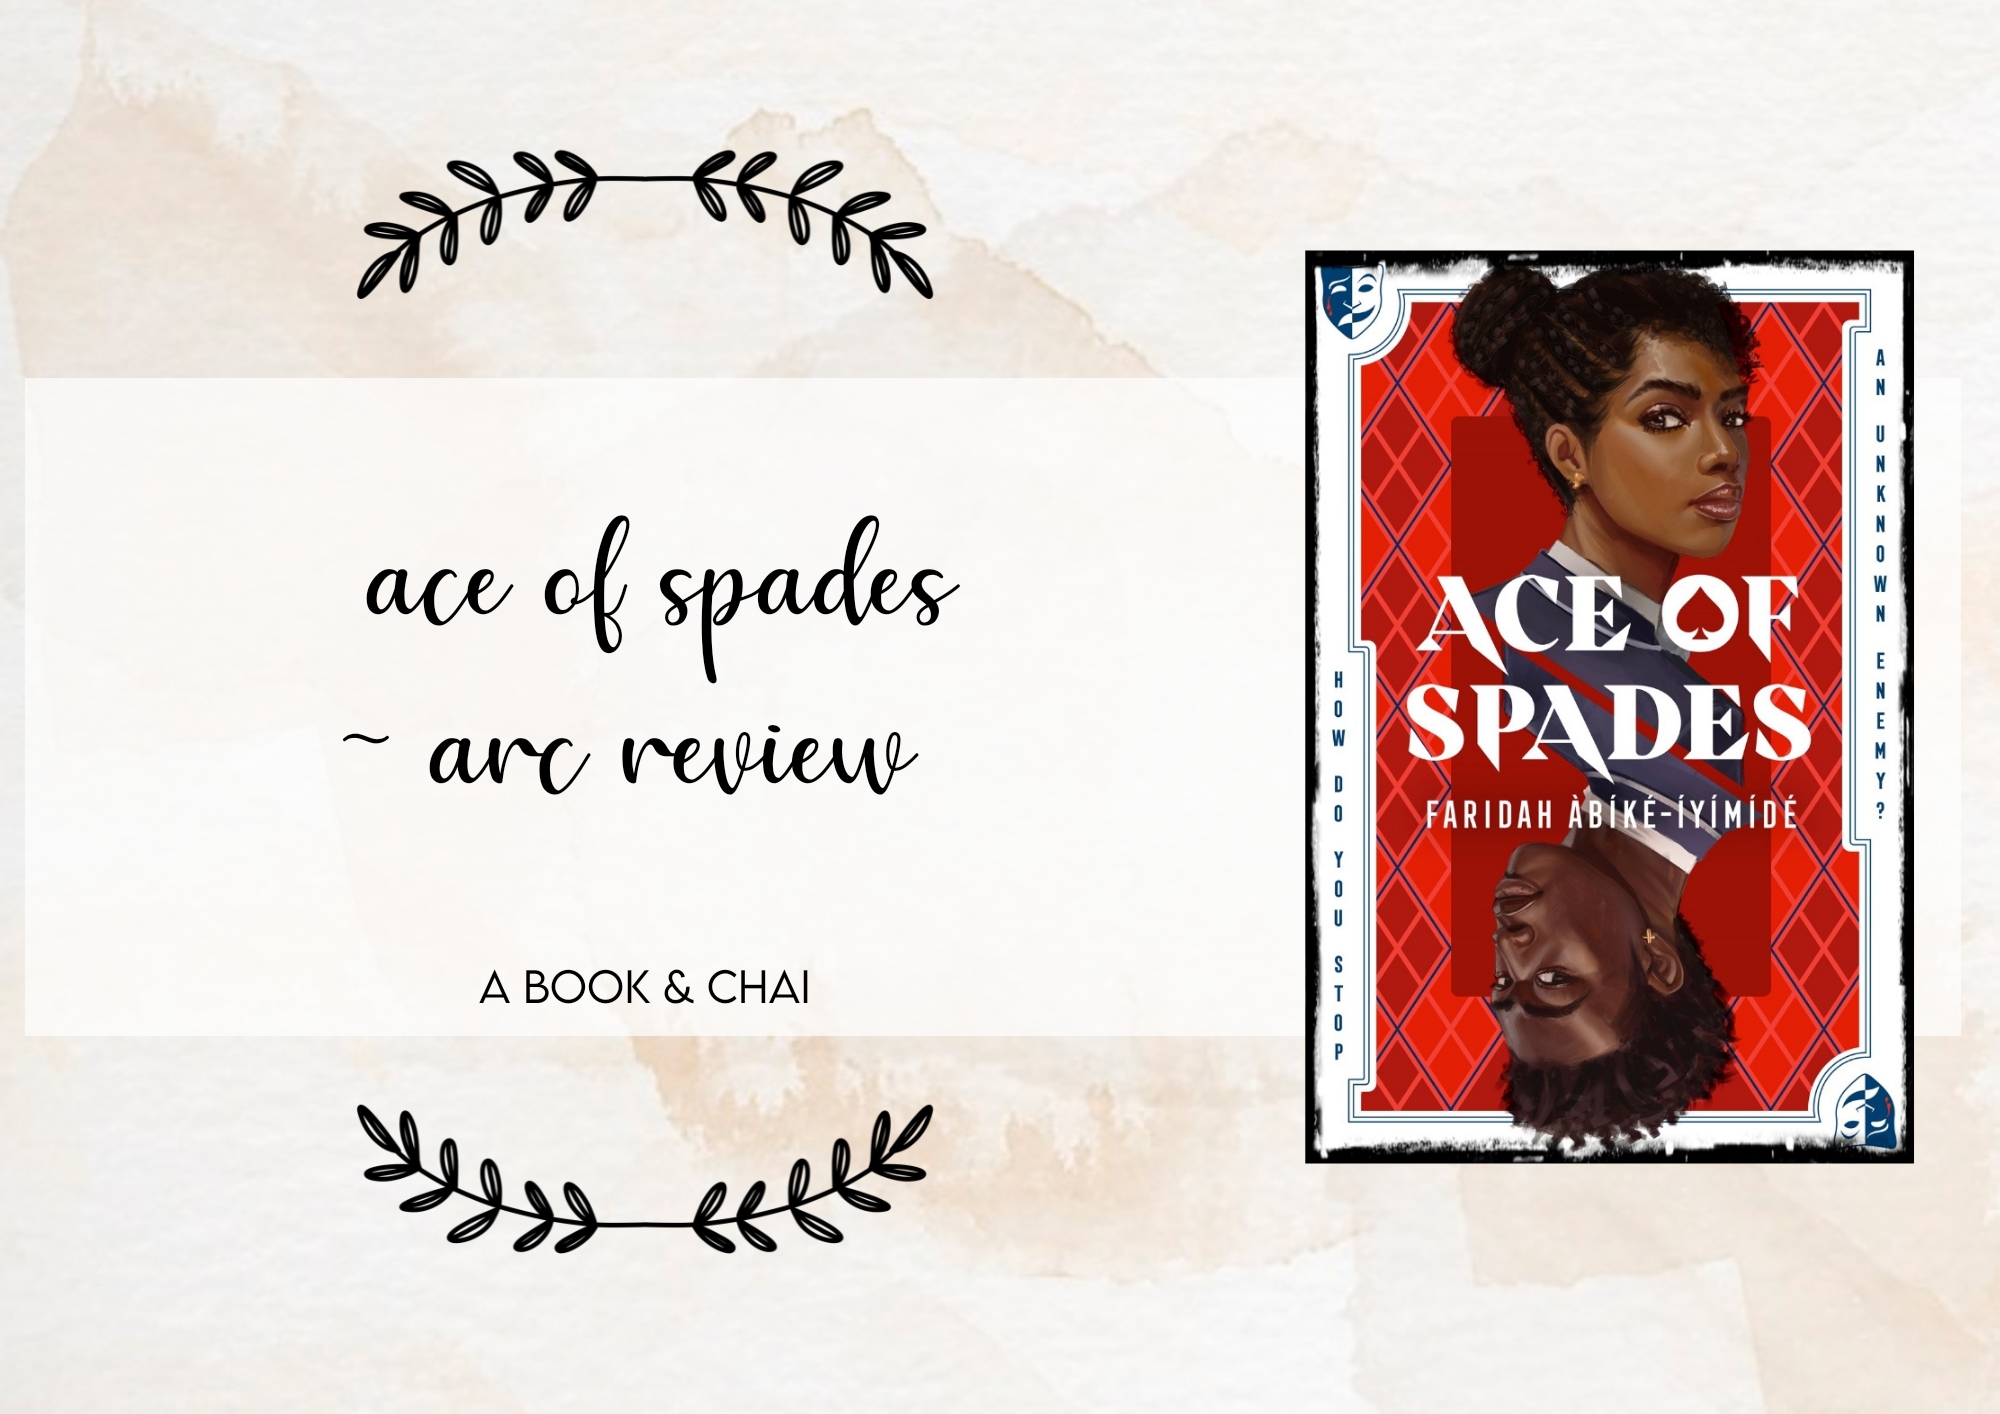 Ace of spades book